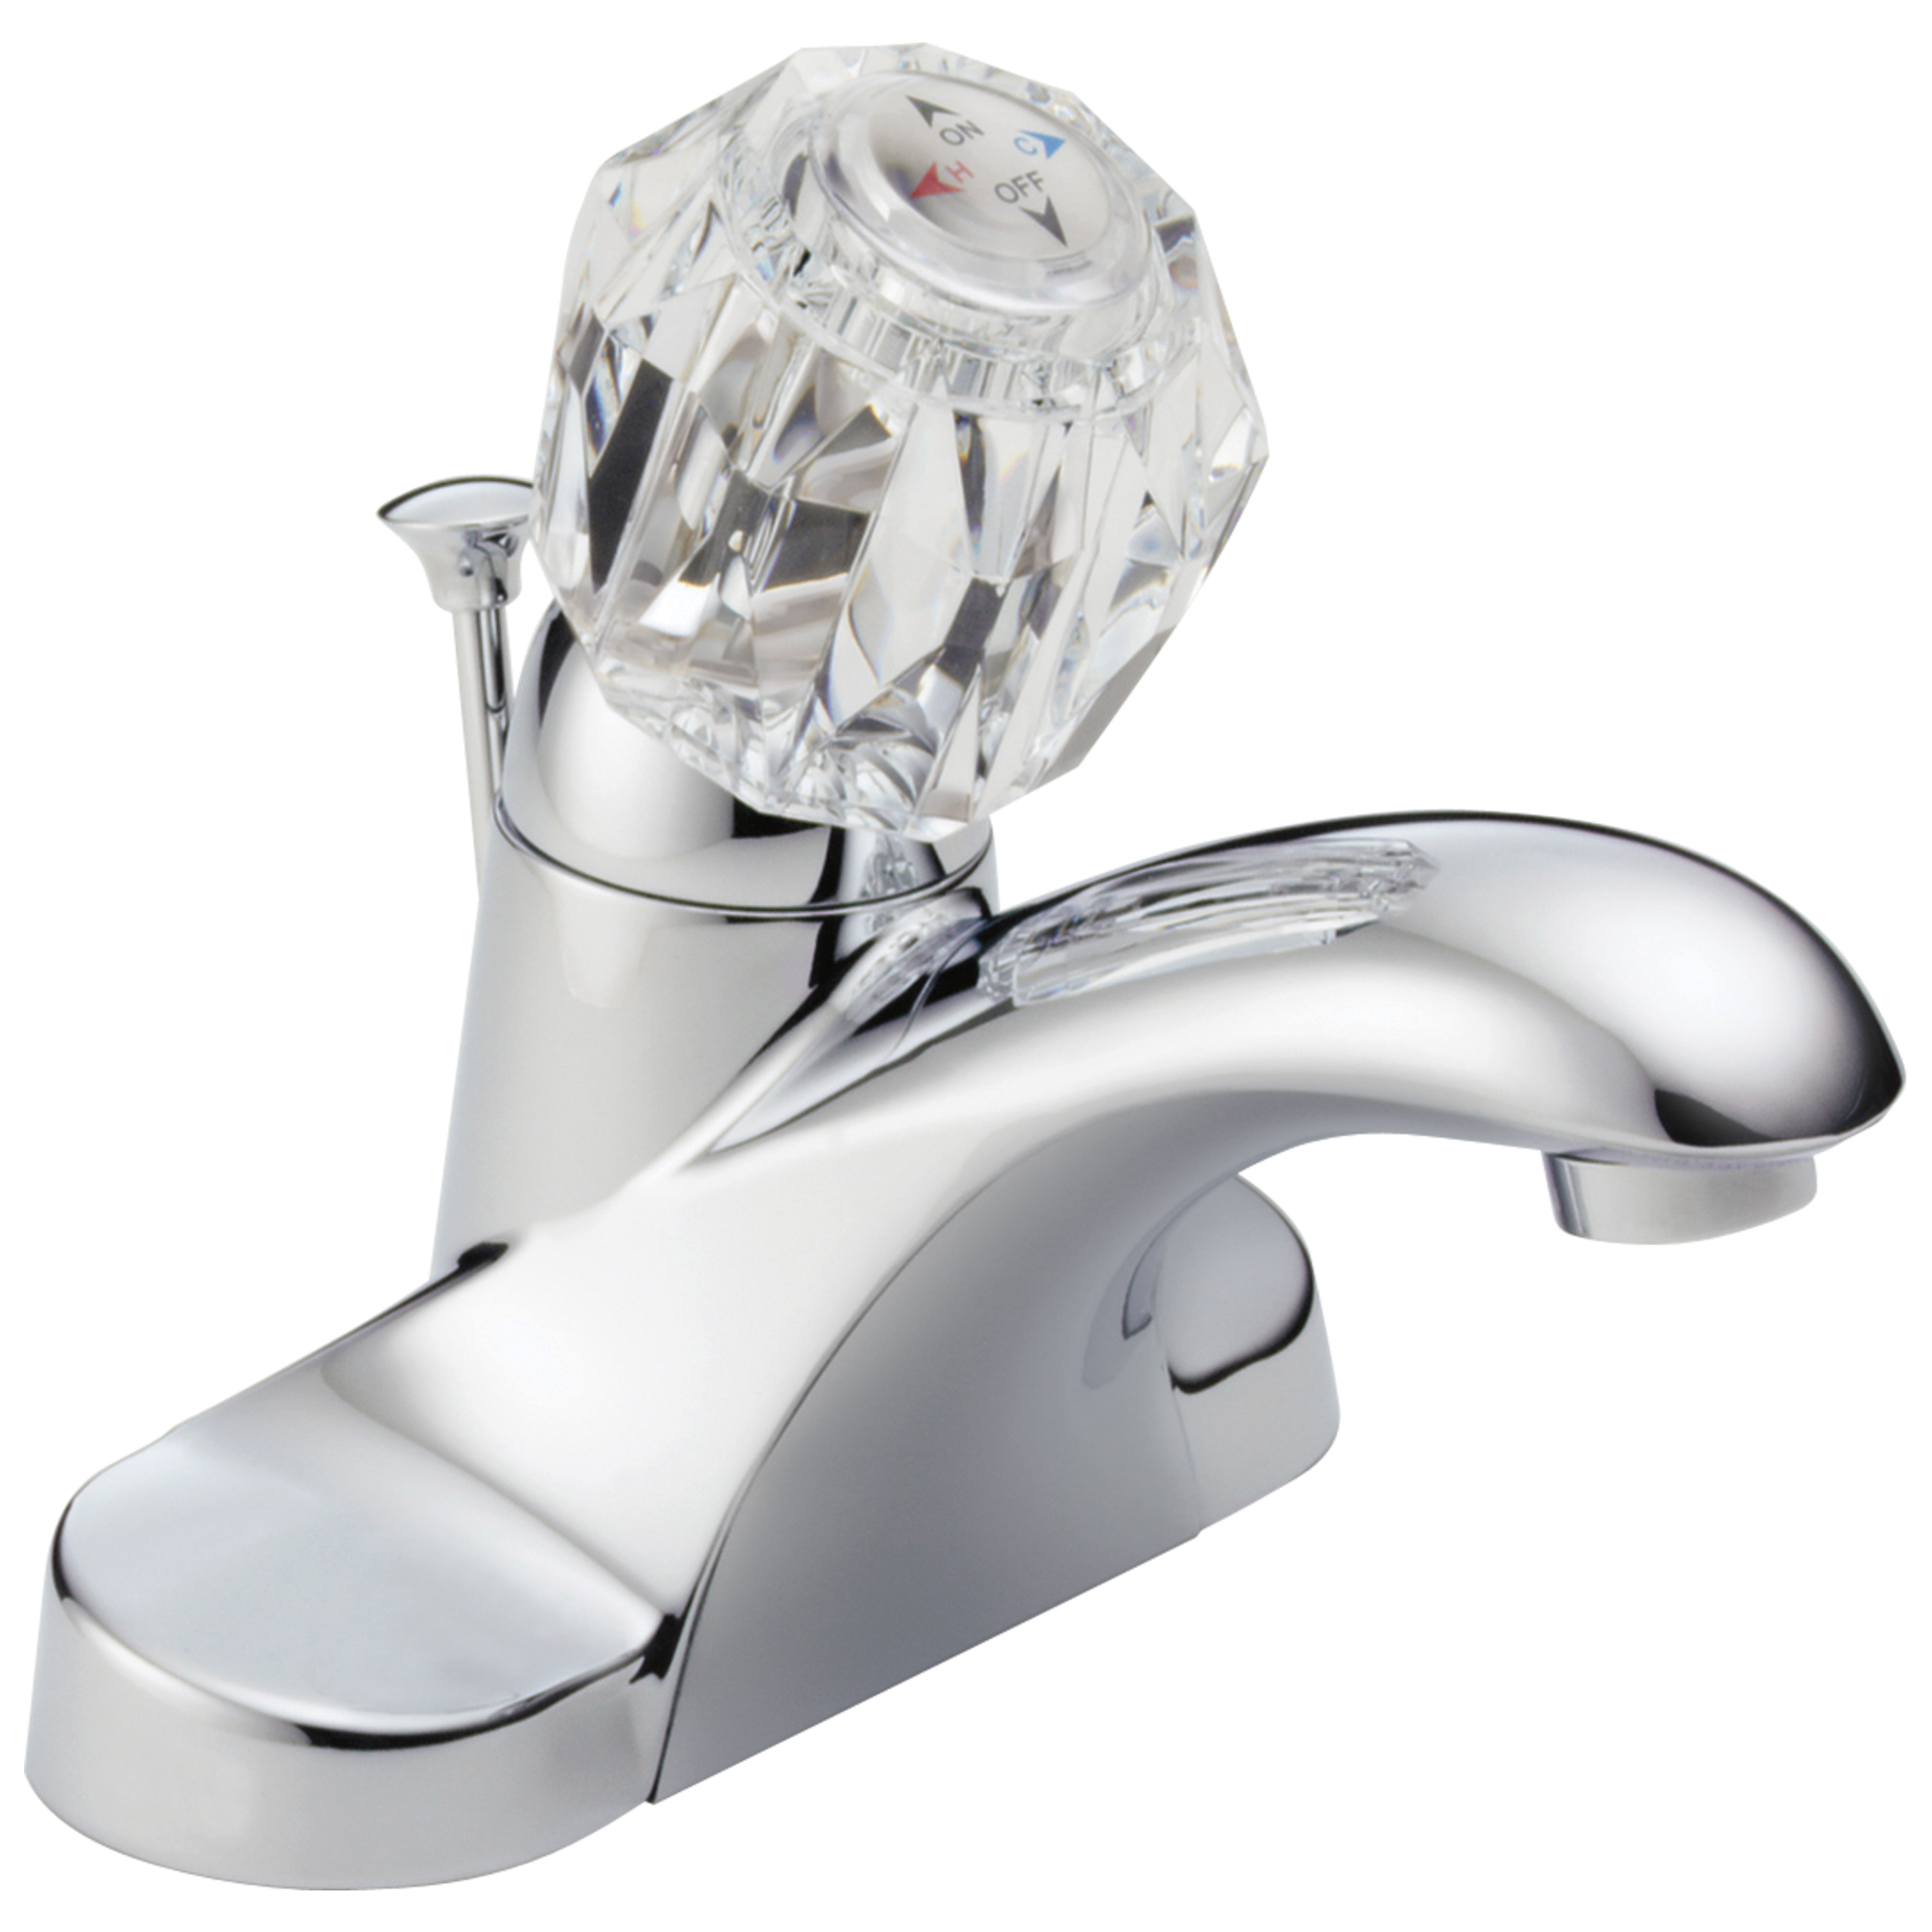 DELTA® B512LF Centerset Lavatory Faucet, Foundations®, Chrome Plated, 1 Handles, Pop-Up Drain, 1.2 gpm